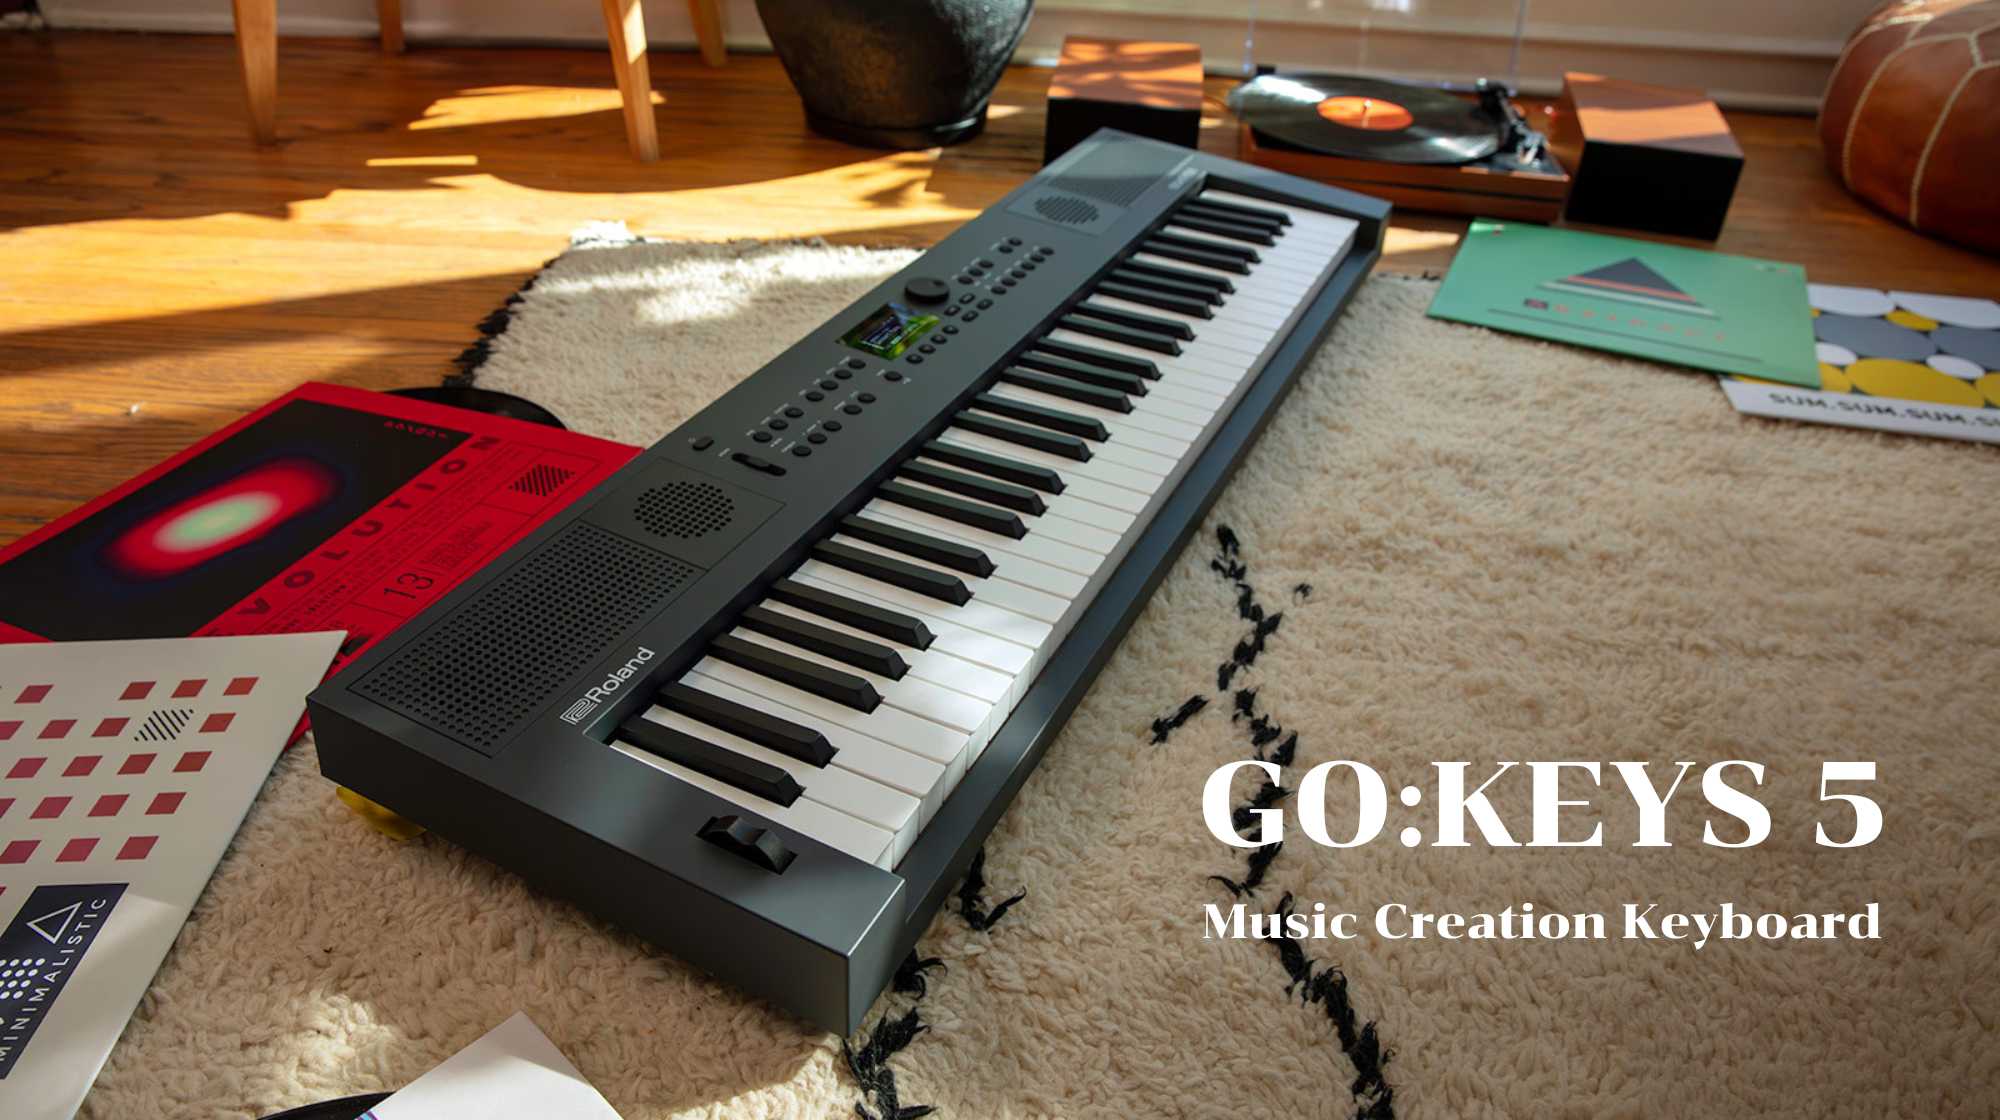 GOKEYS 5 Music Creation Keyboard